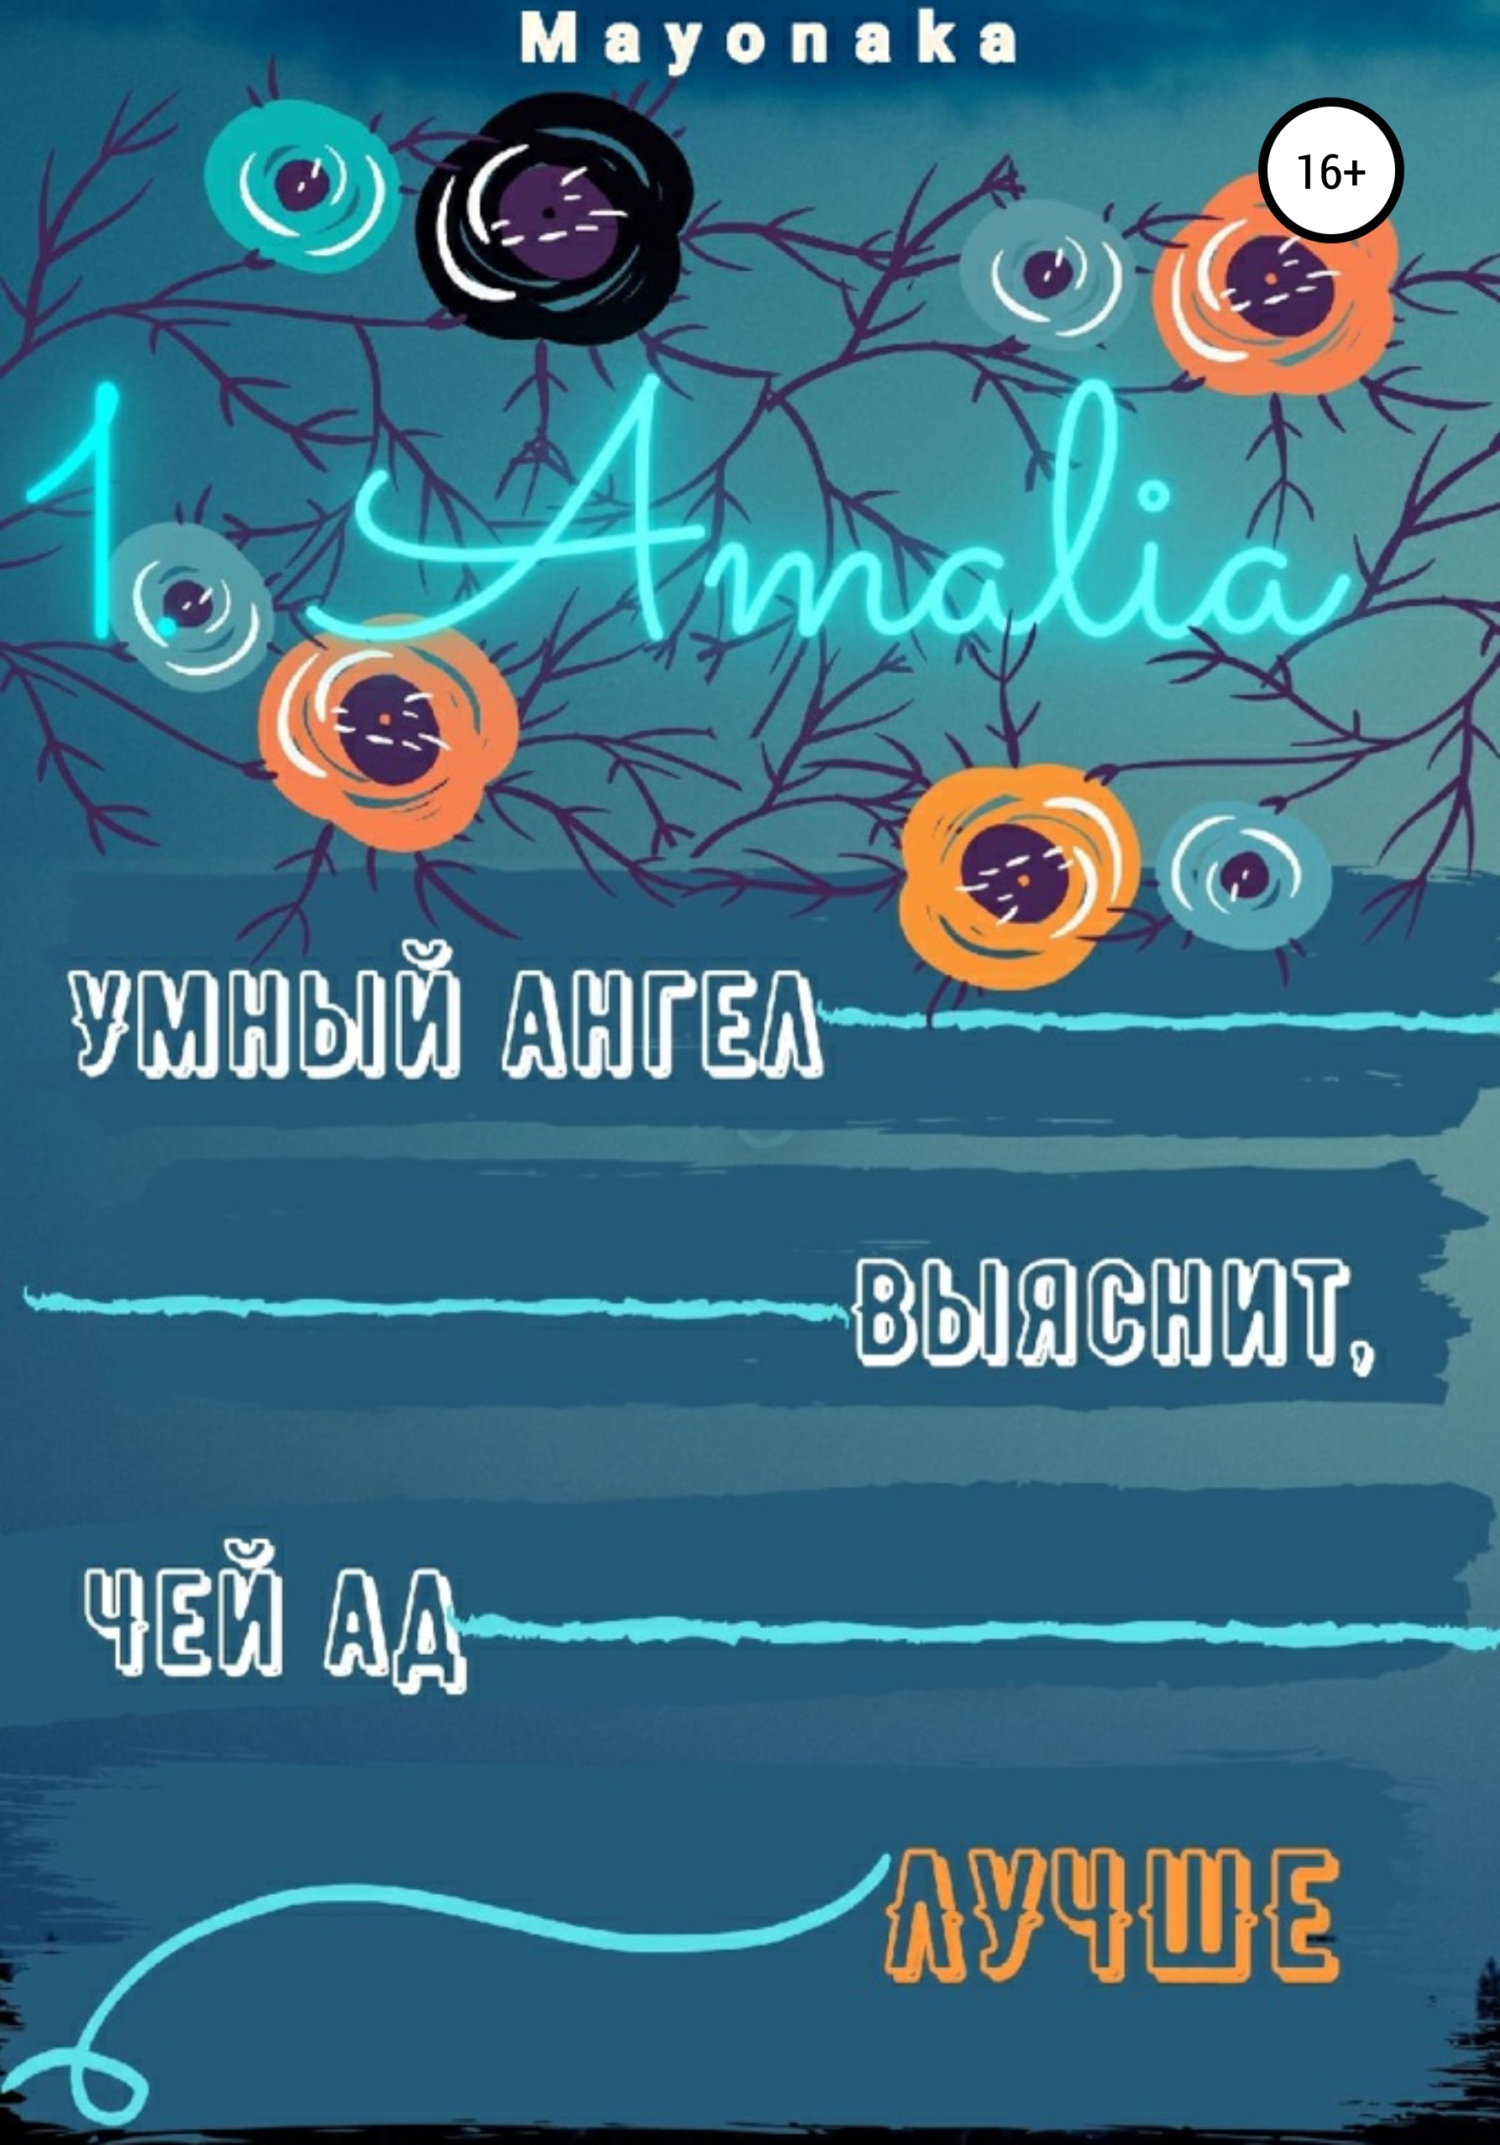 1. Amalia - Mayonaka